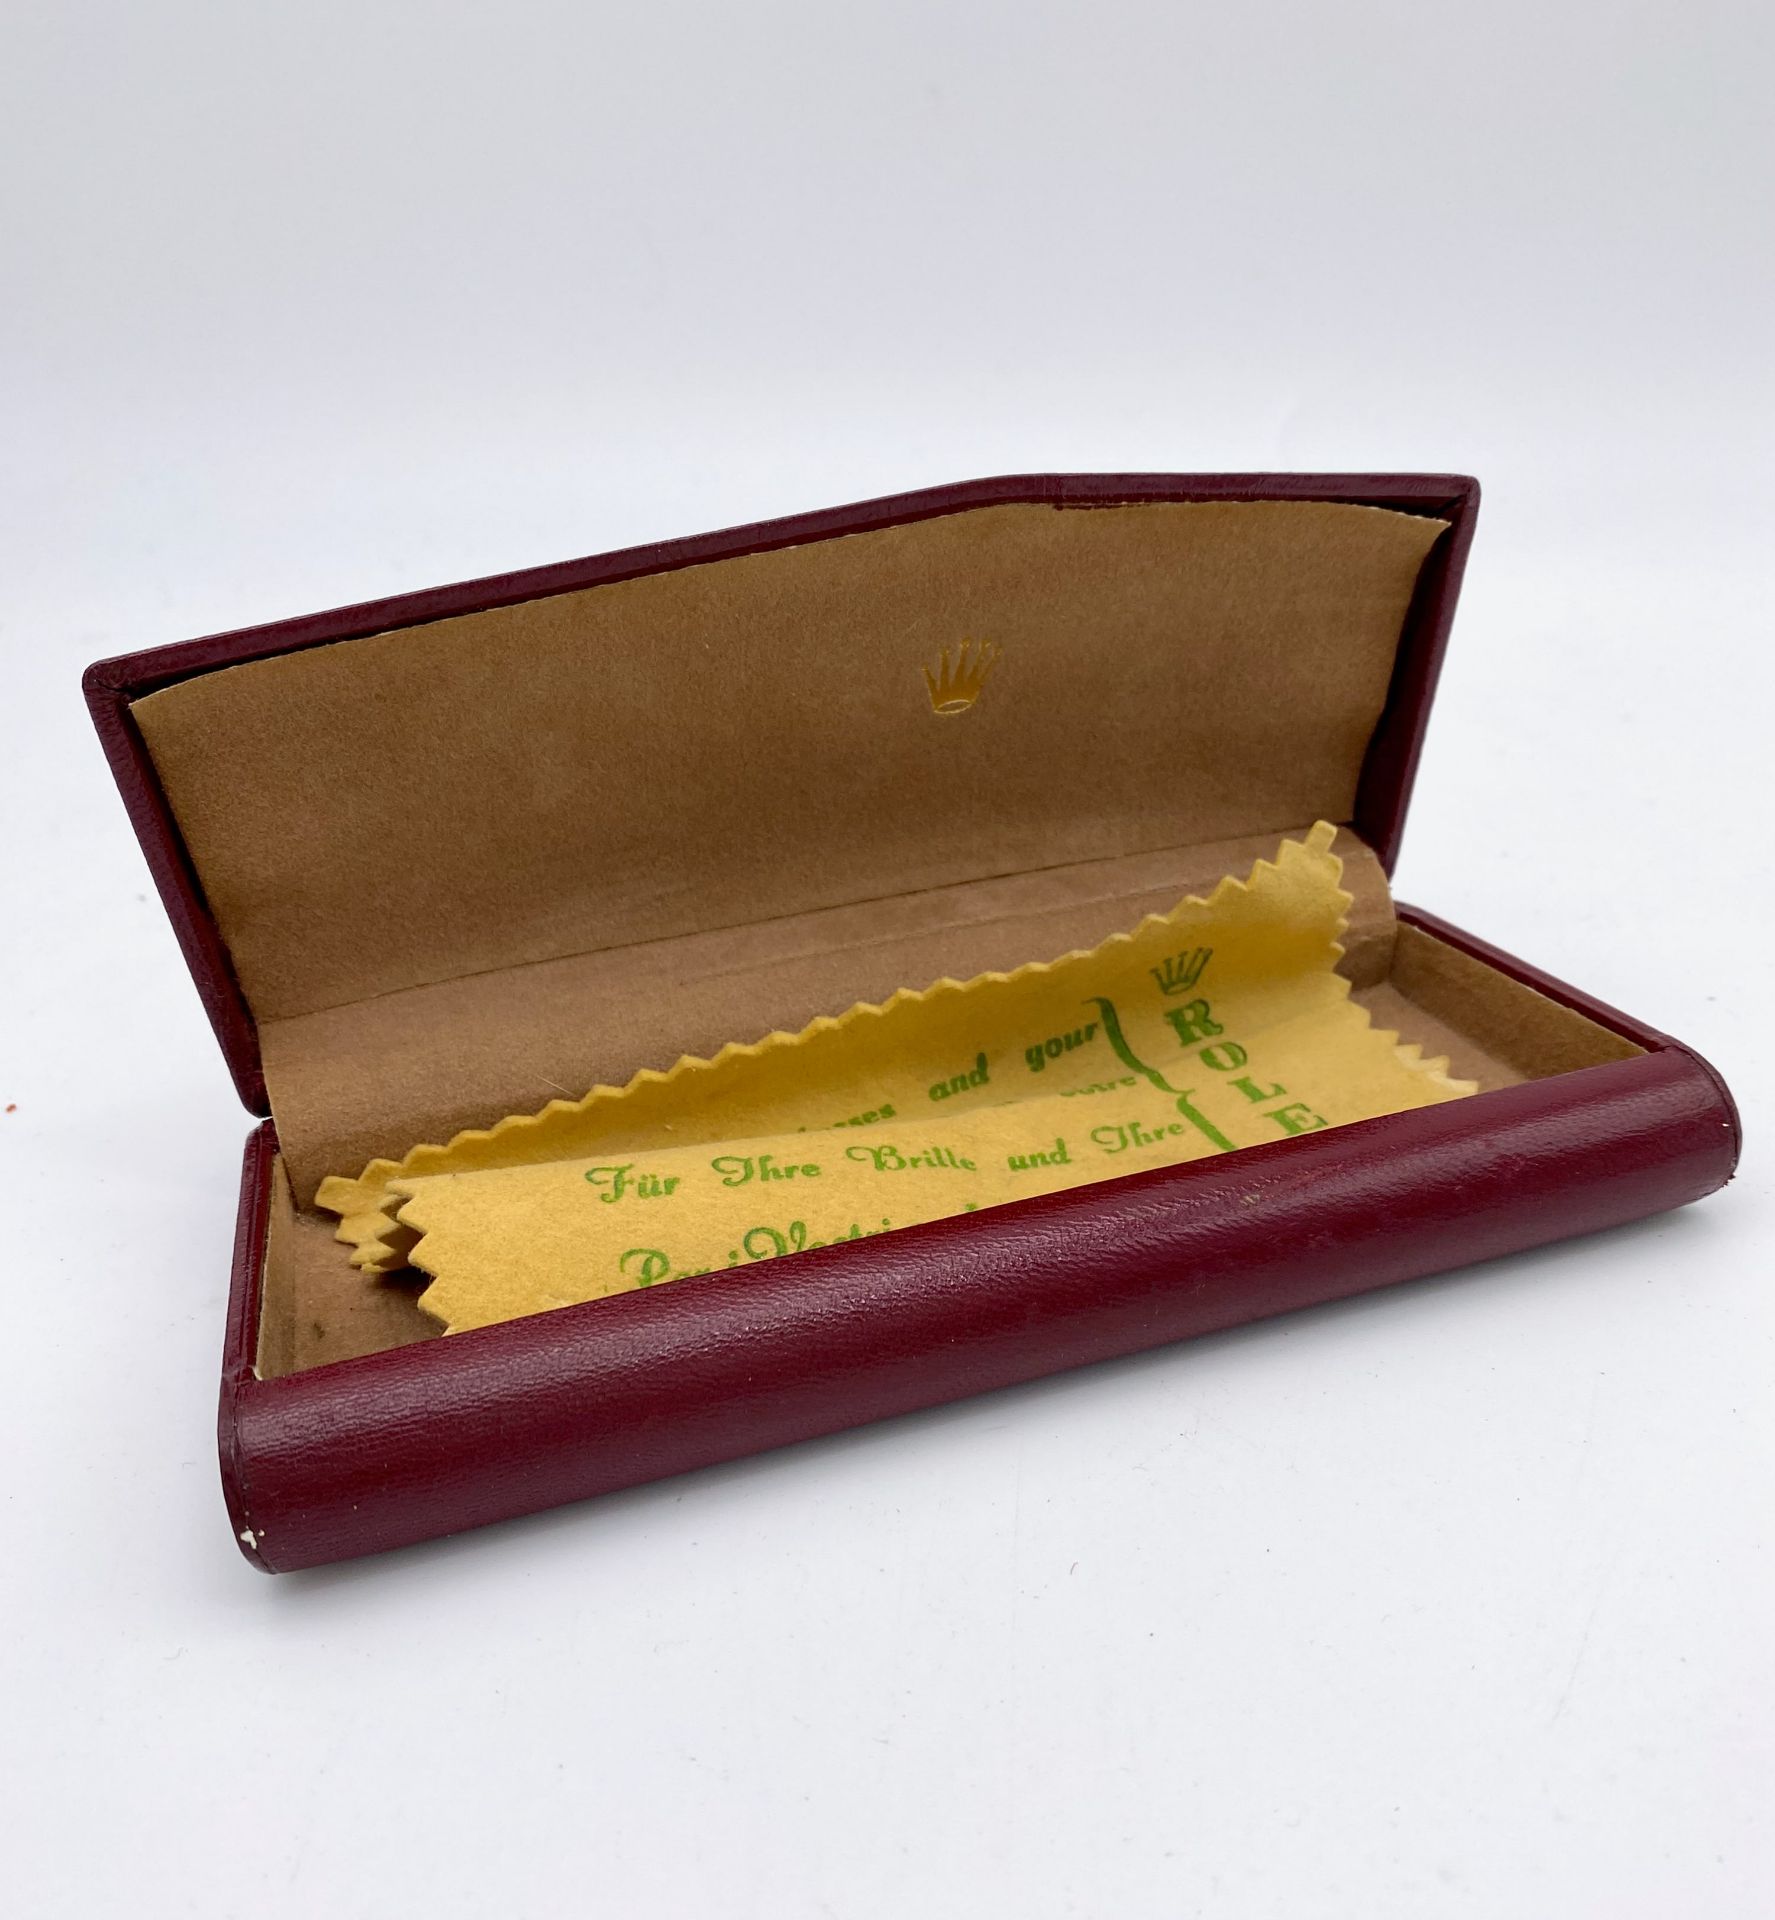 ROLEX - boitier ca 1950-60 - en maroquin bordeaux - "Box made in Switzerland" - Image 2 of 3